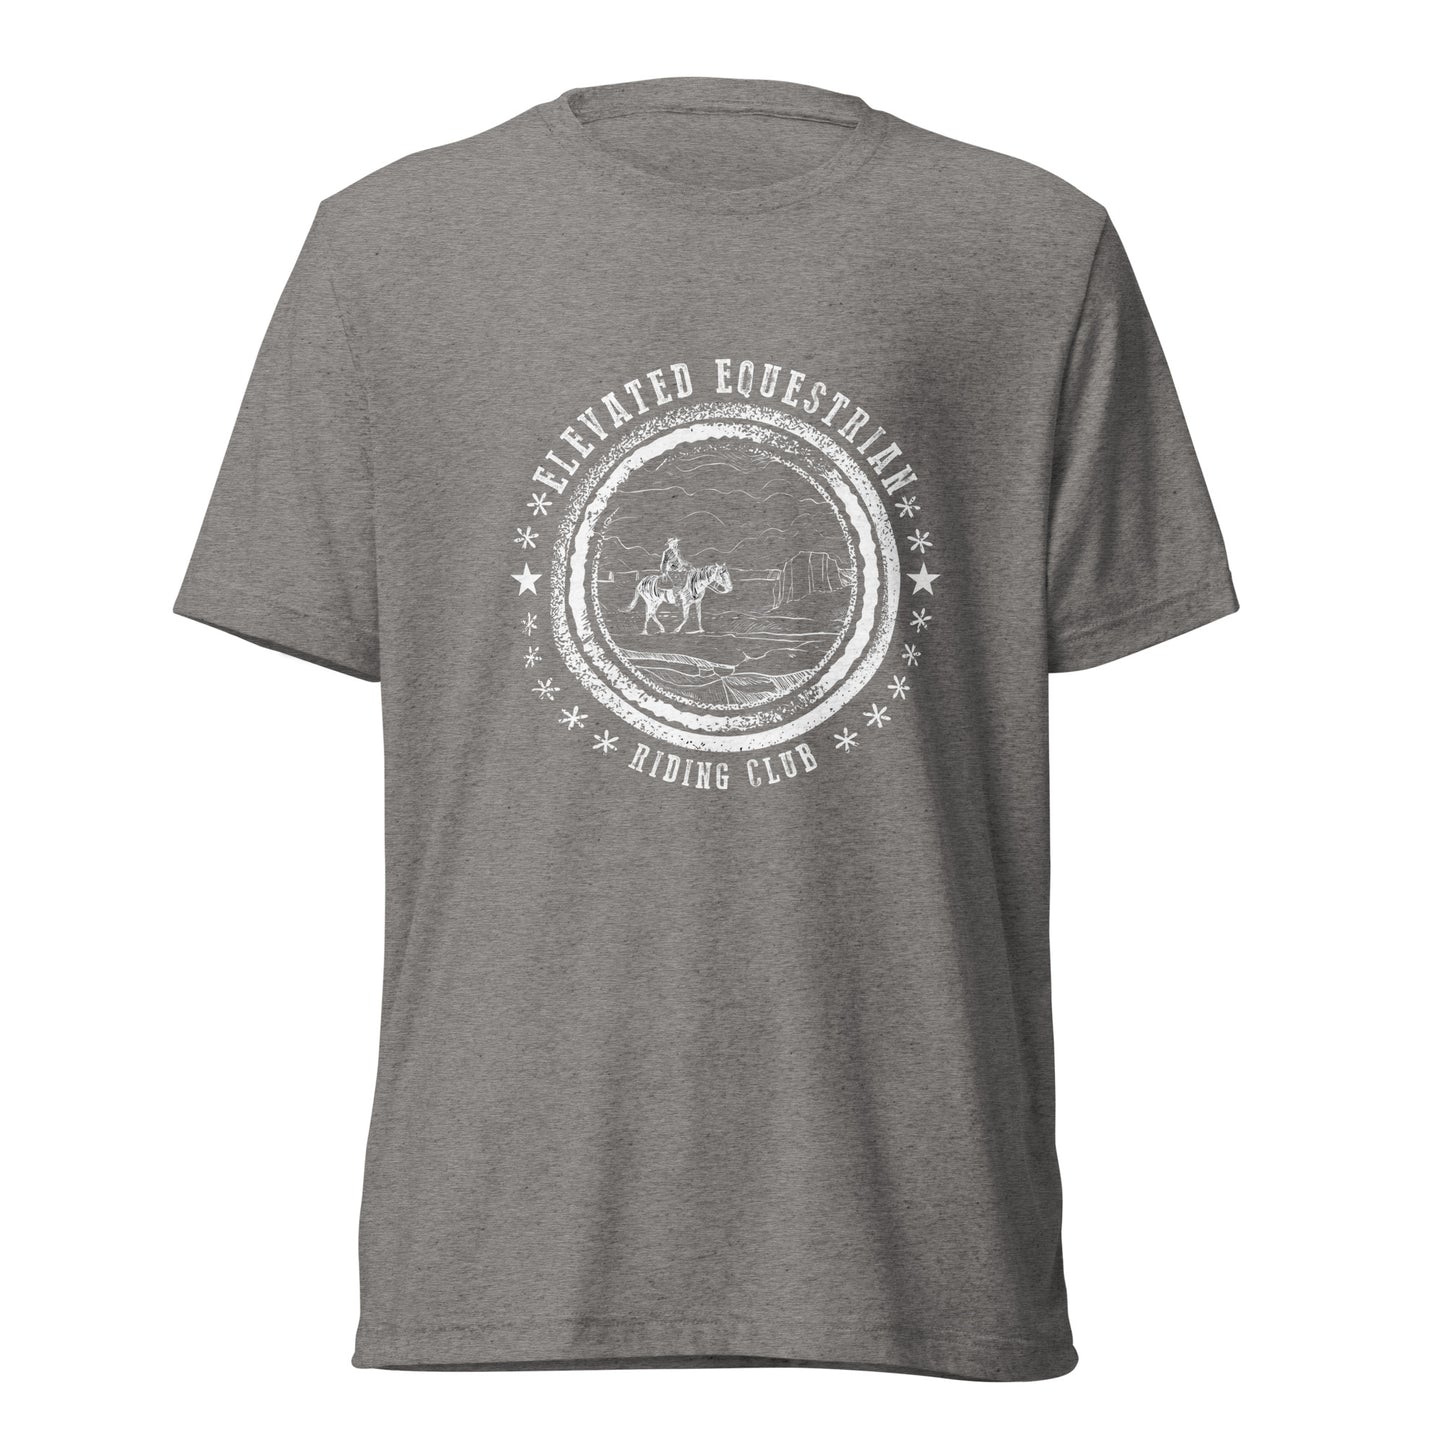 Elevated Equestrian Riding Club Grey Unisex Short Sleeve T-shirt